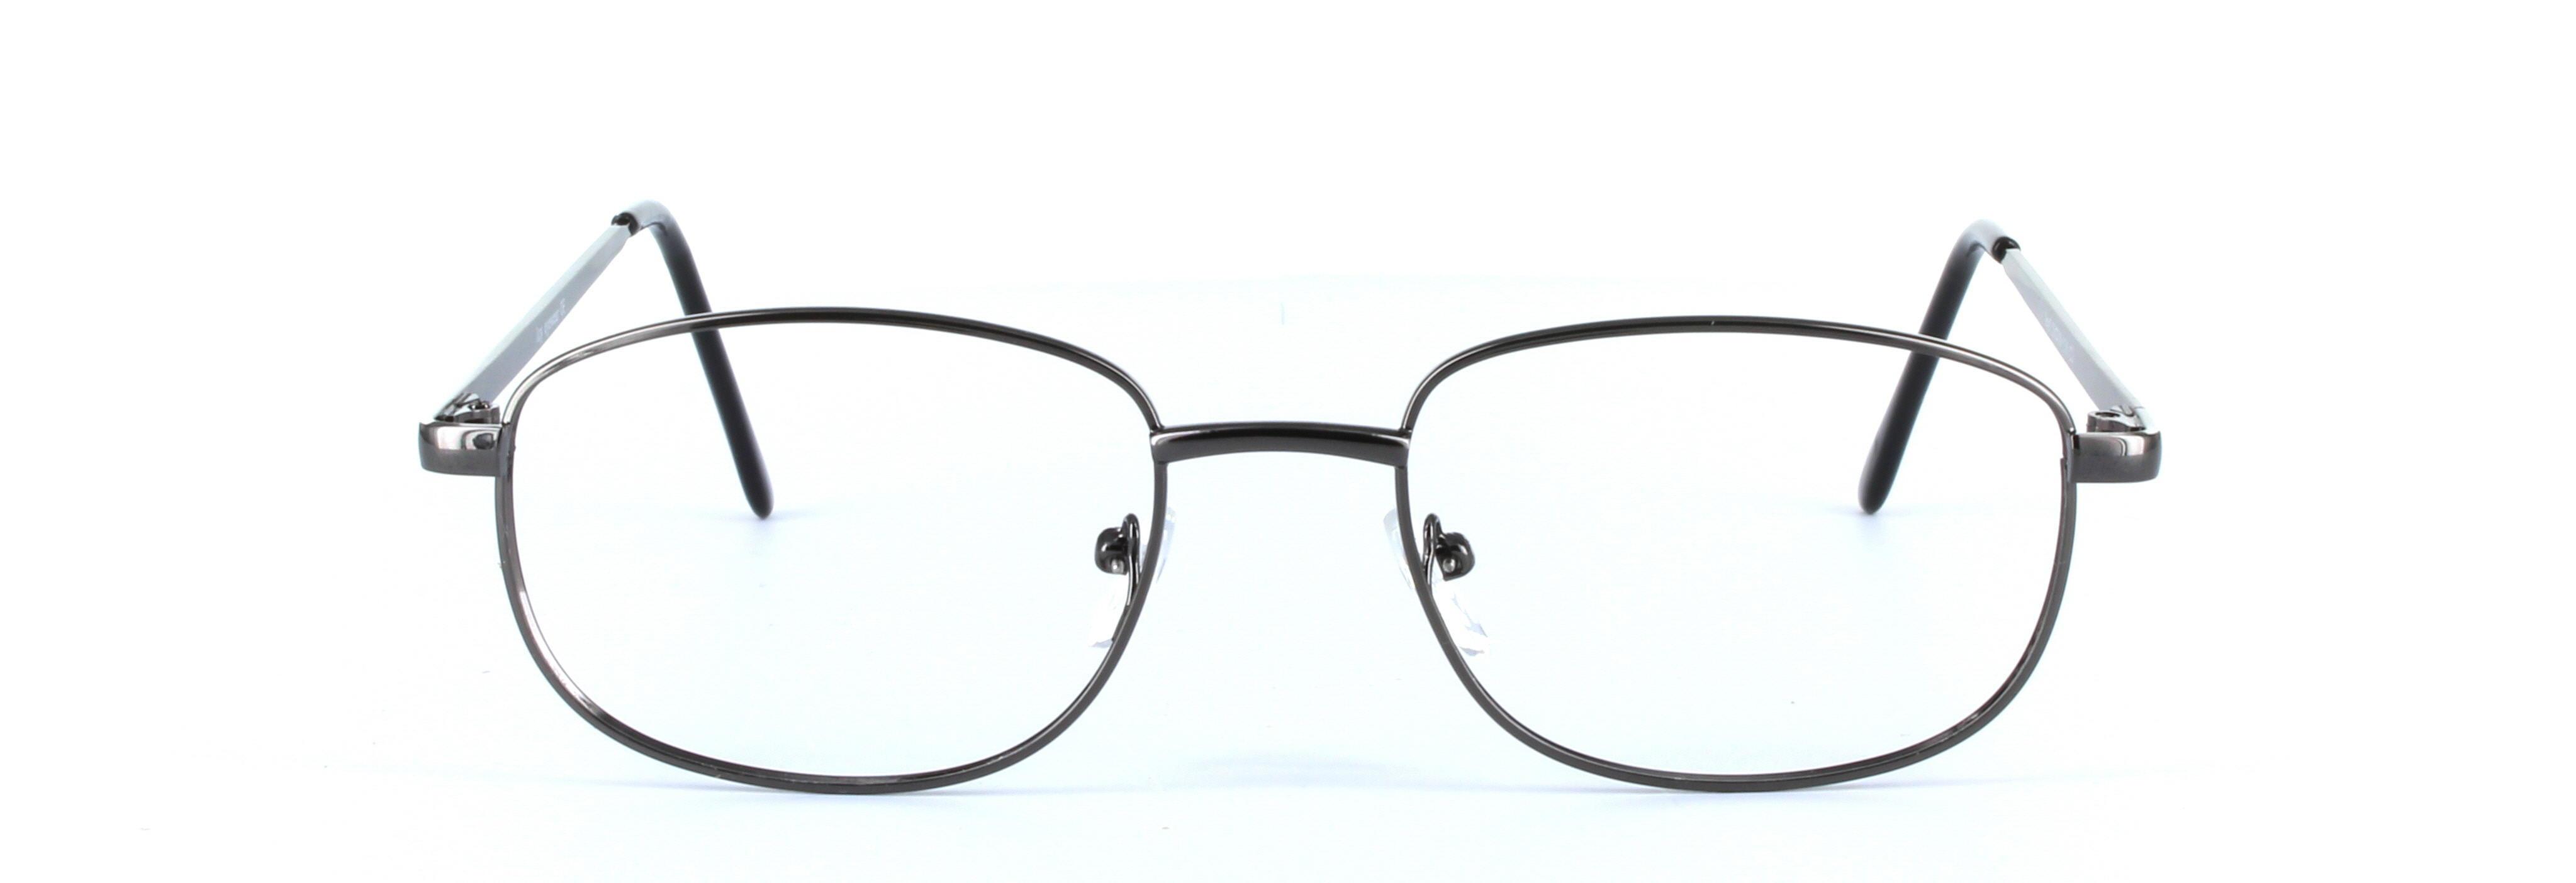 Ashton Gunmetal Full Rim Rectangular Metal Glasses - Image View 5